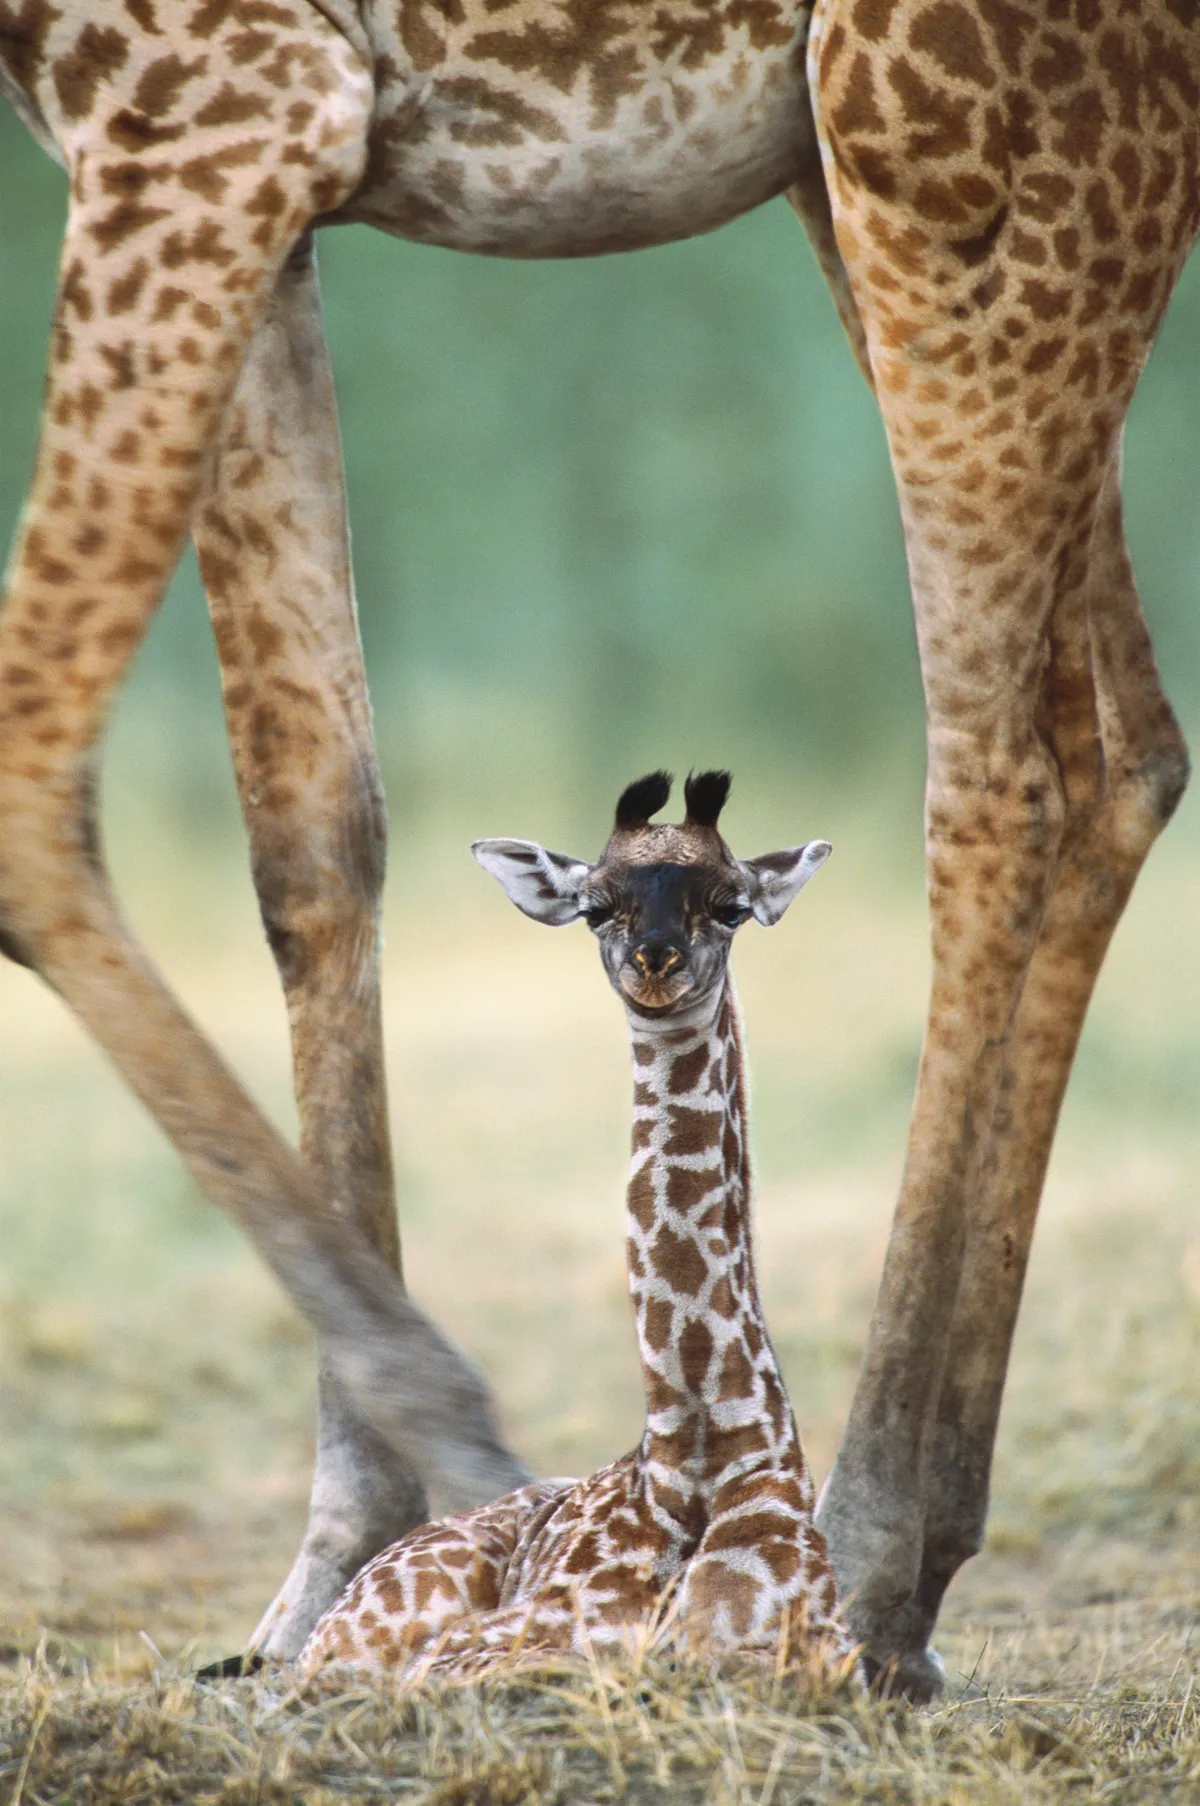 A newborn giraffe calf sitting beneath mother's legs, Masai Mara National Reserve, Kenya